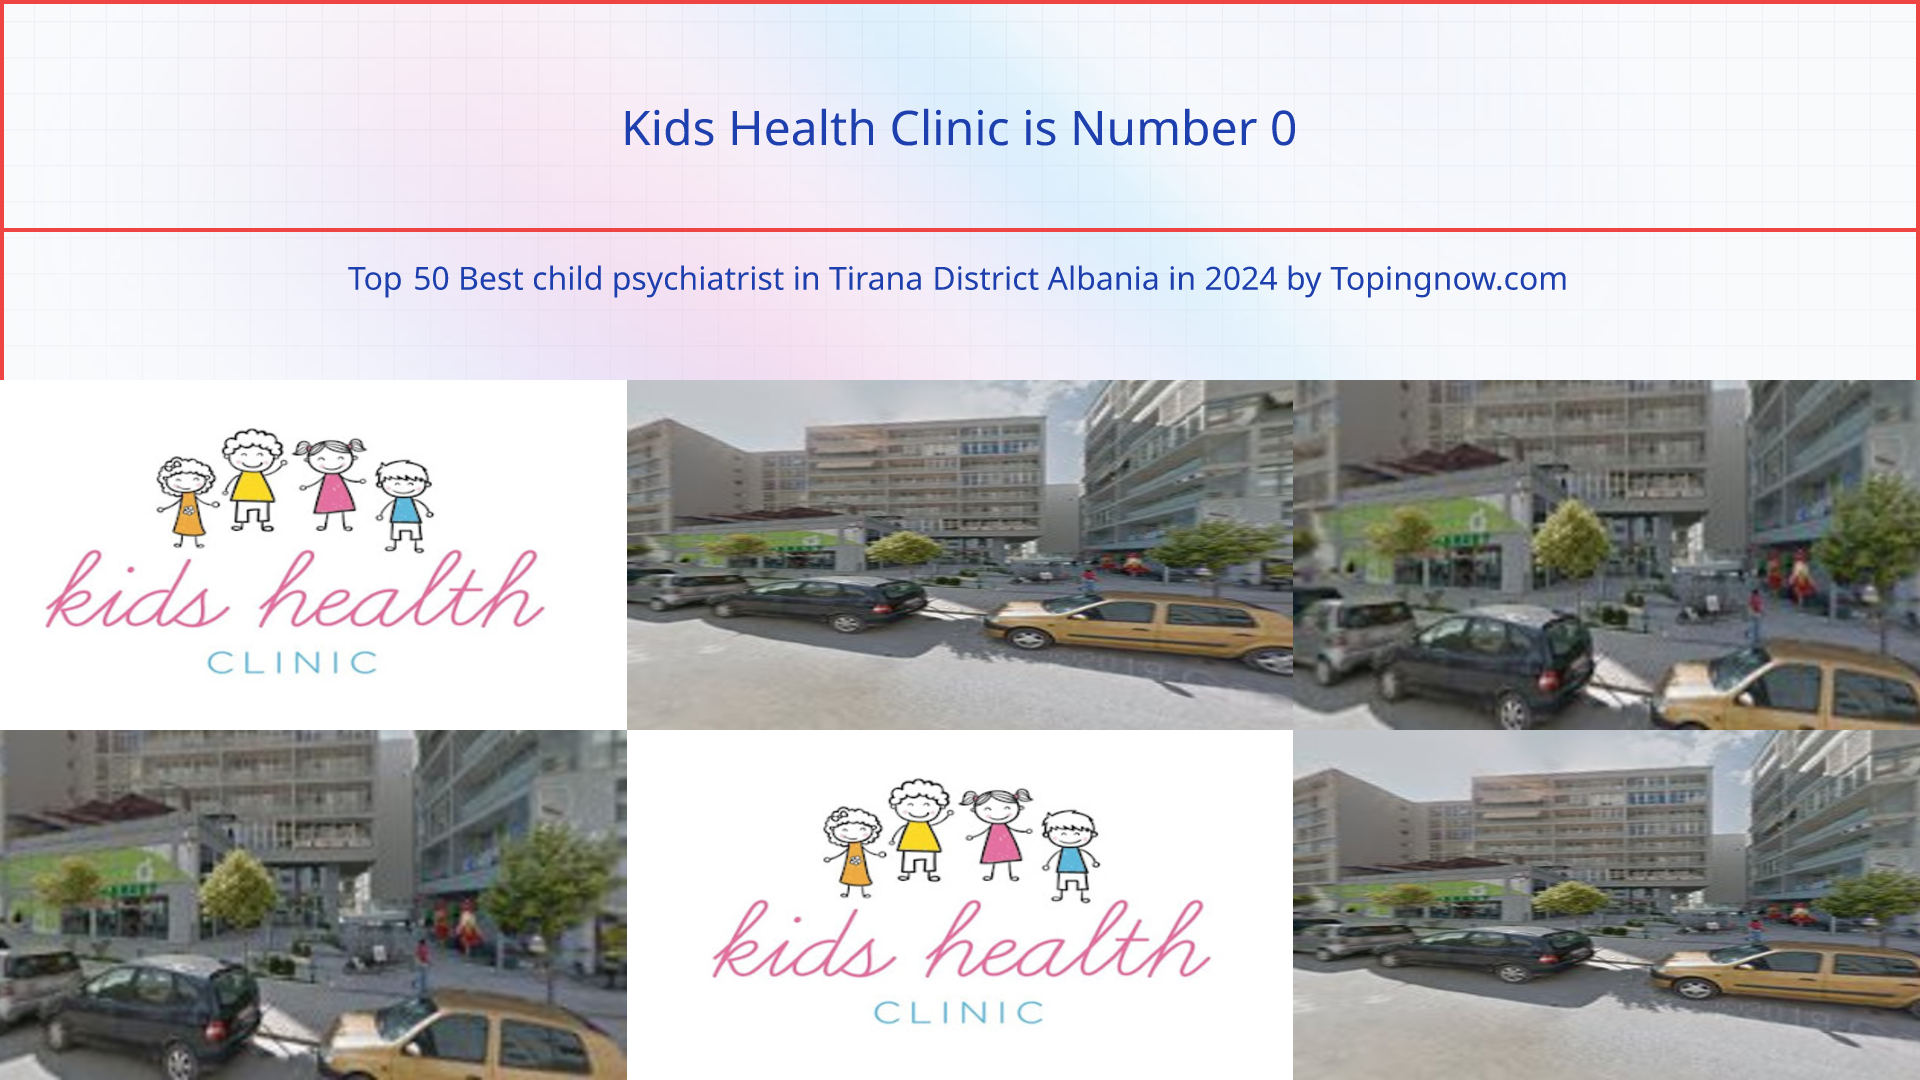 Kids Health Clinic: Top 50 Best child psychiatrist in Tirana District Albania in 2024